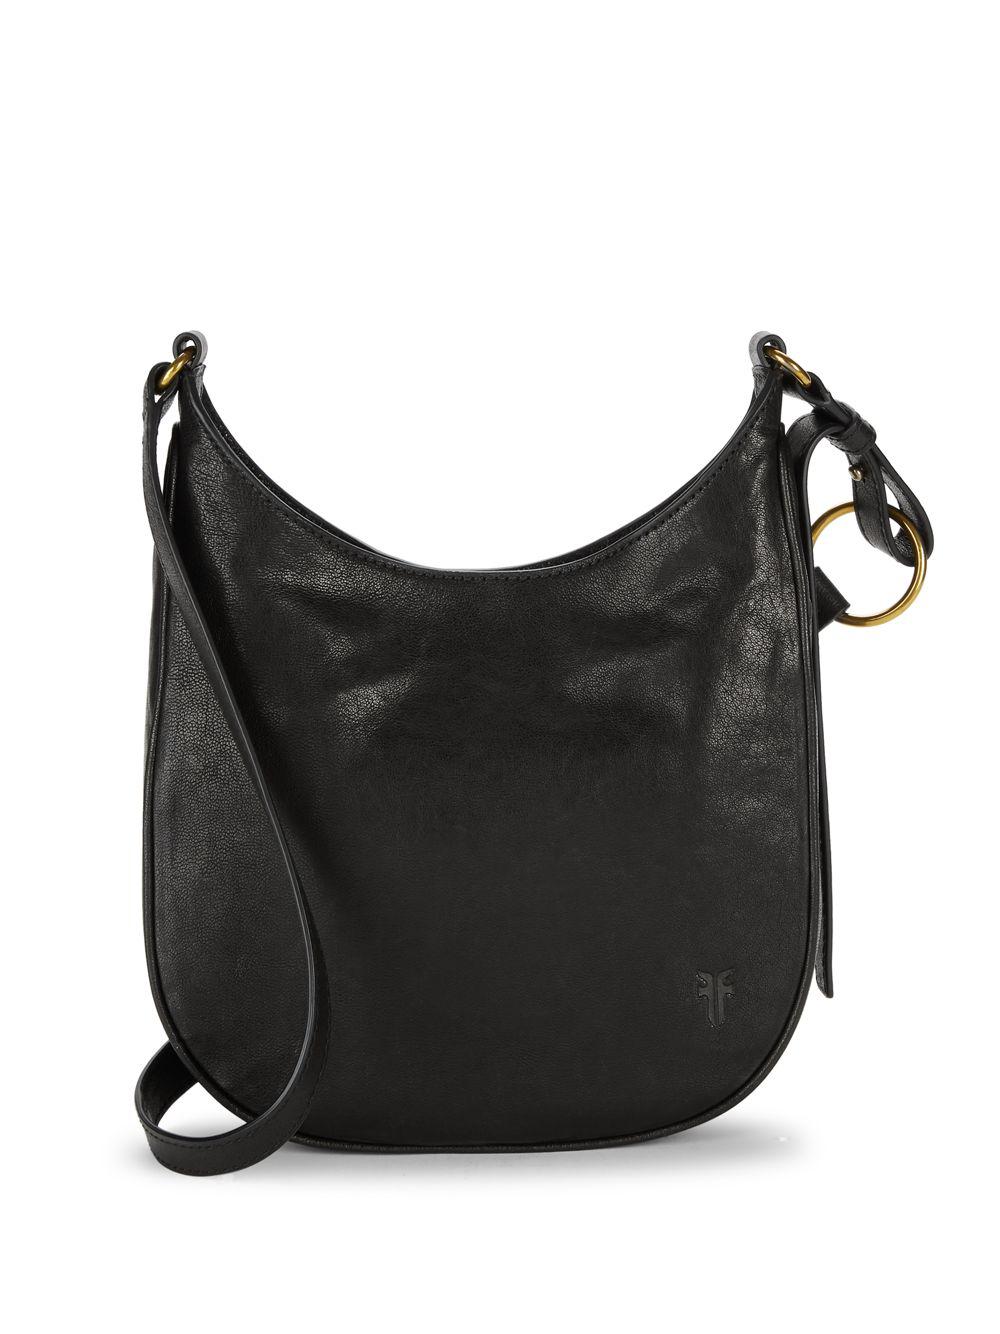 Frye Madison Leather Crossbody Bag in Black - Lyst